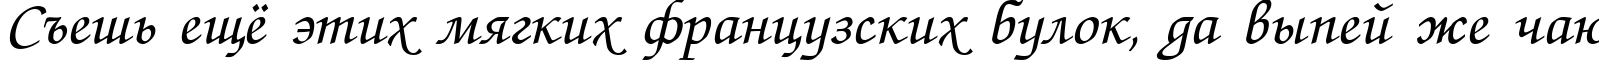 Пример написания шрифтом Zapf ChanceC Italic текста на русском